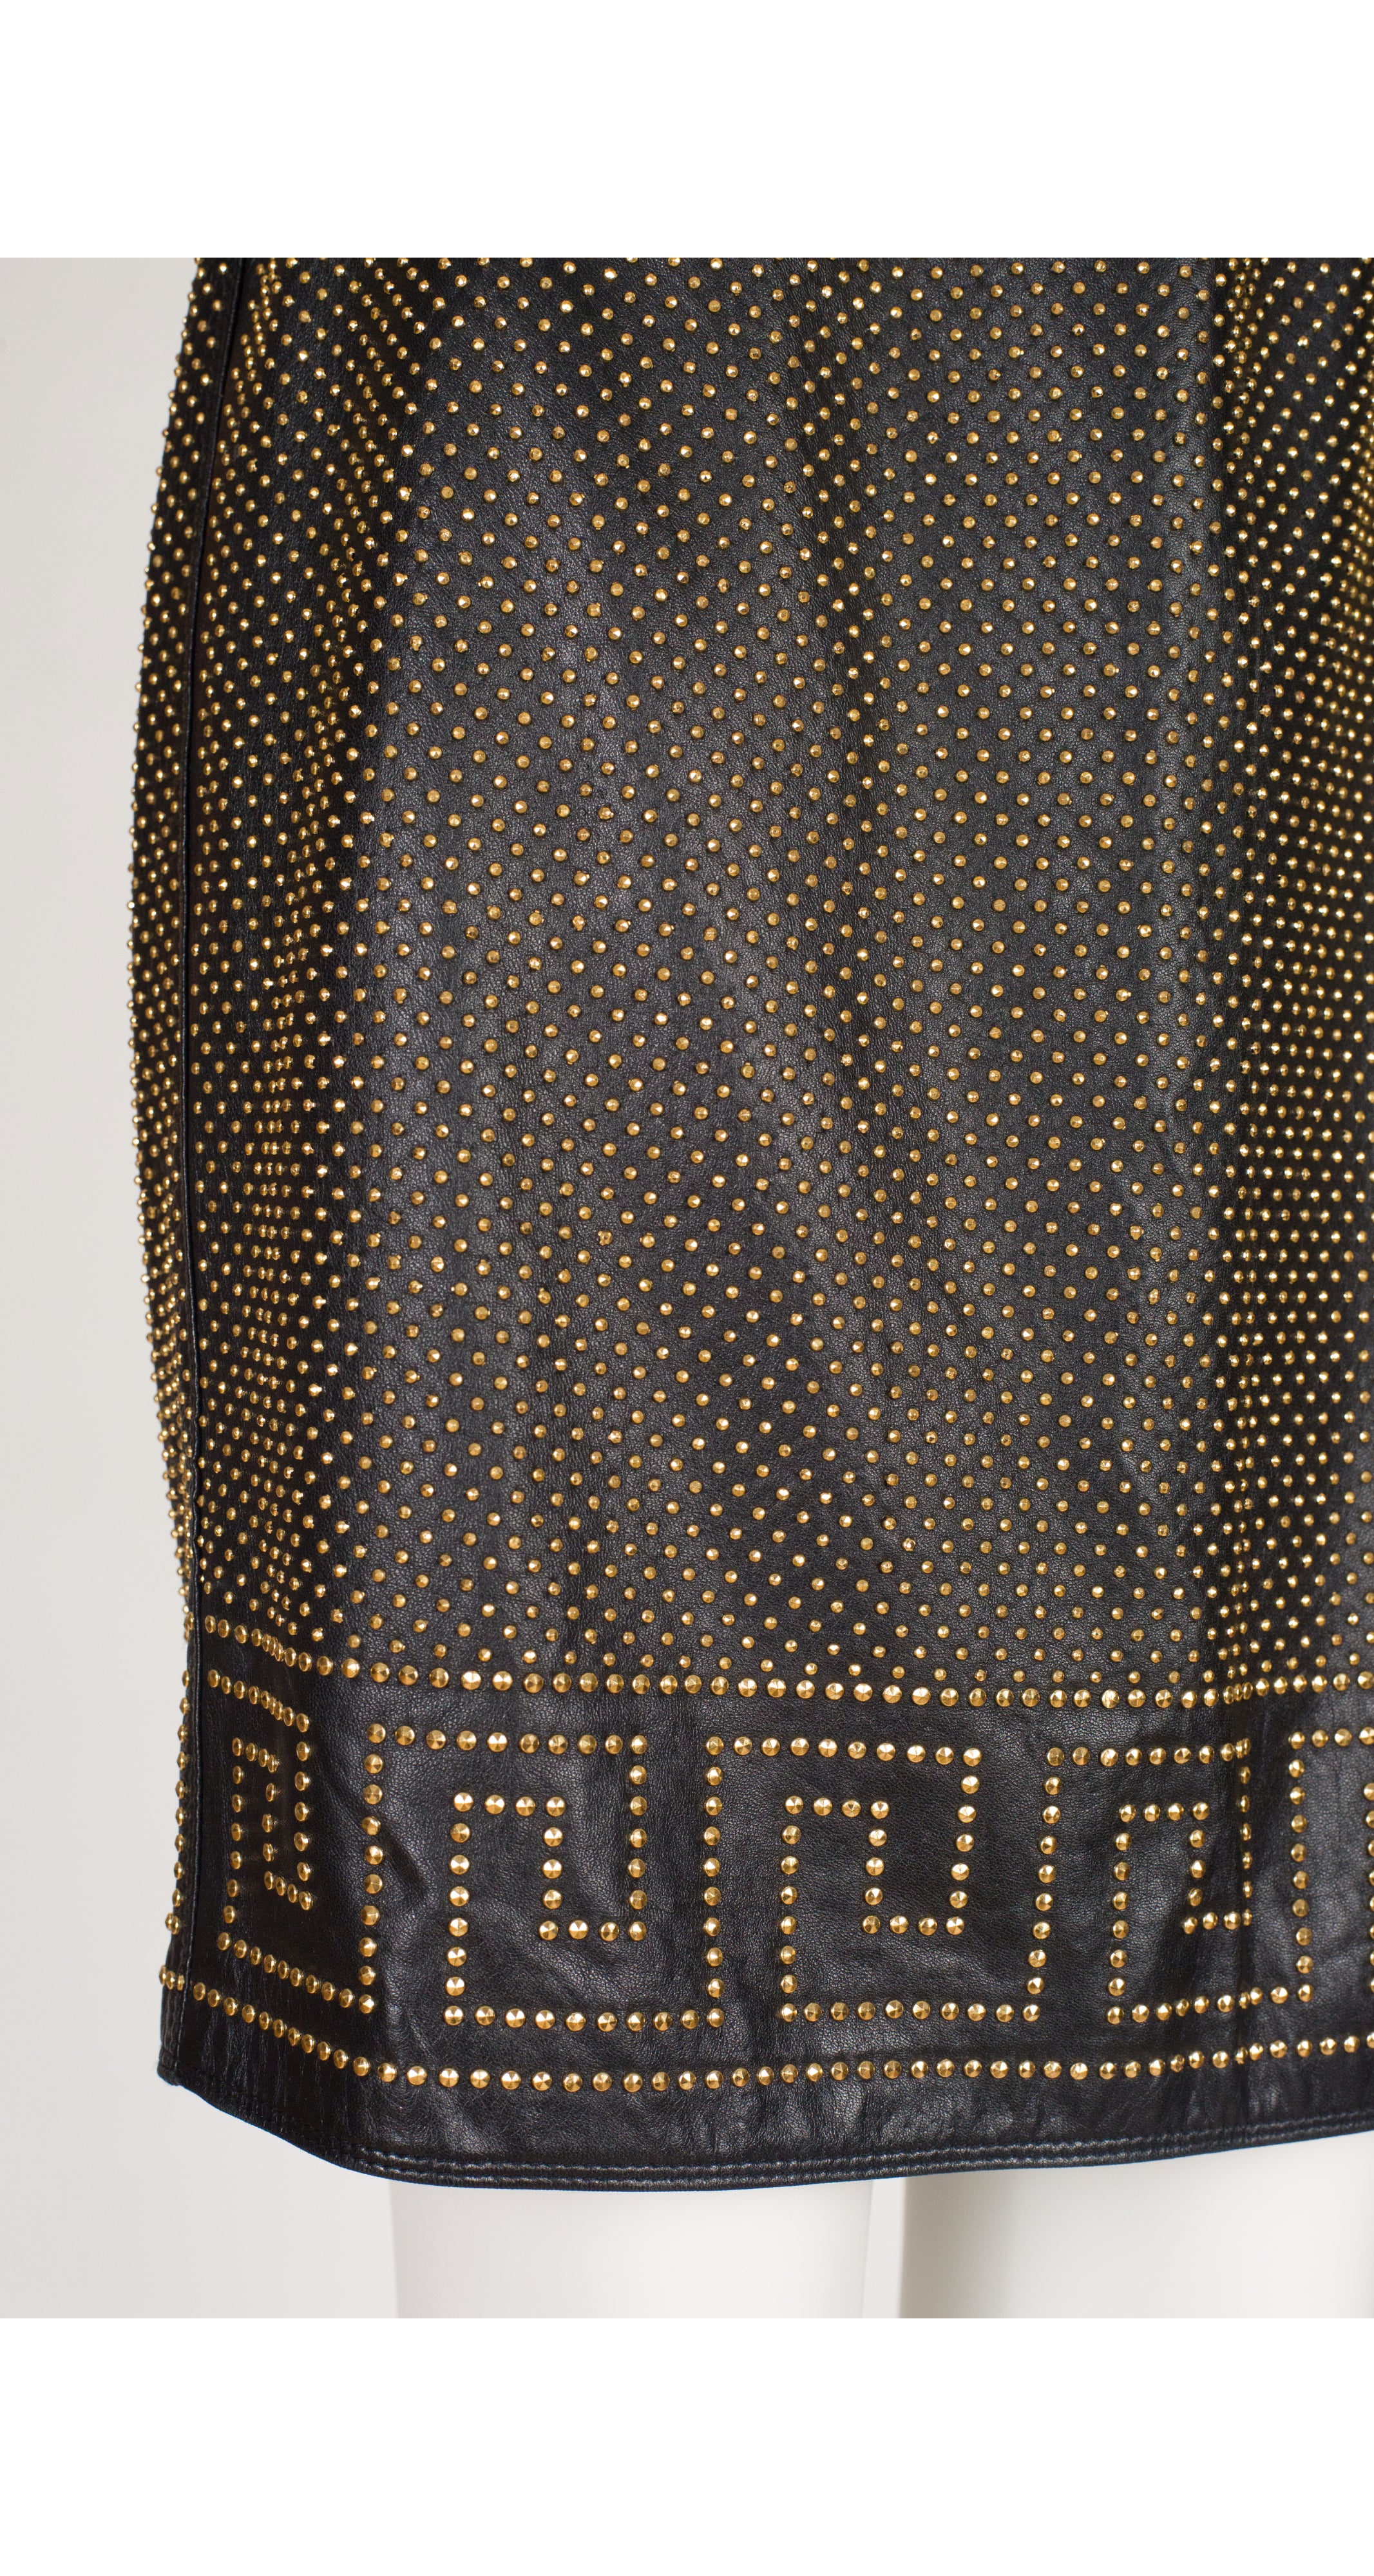 1992 Iconic Greek Key Gold Studded Black Leather Skirt